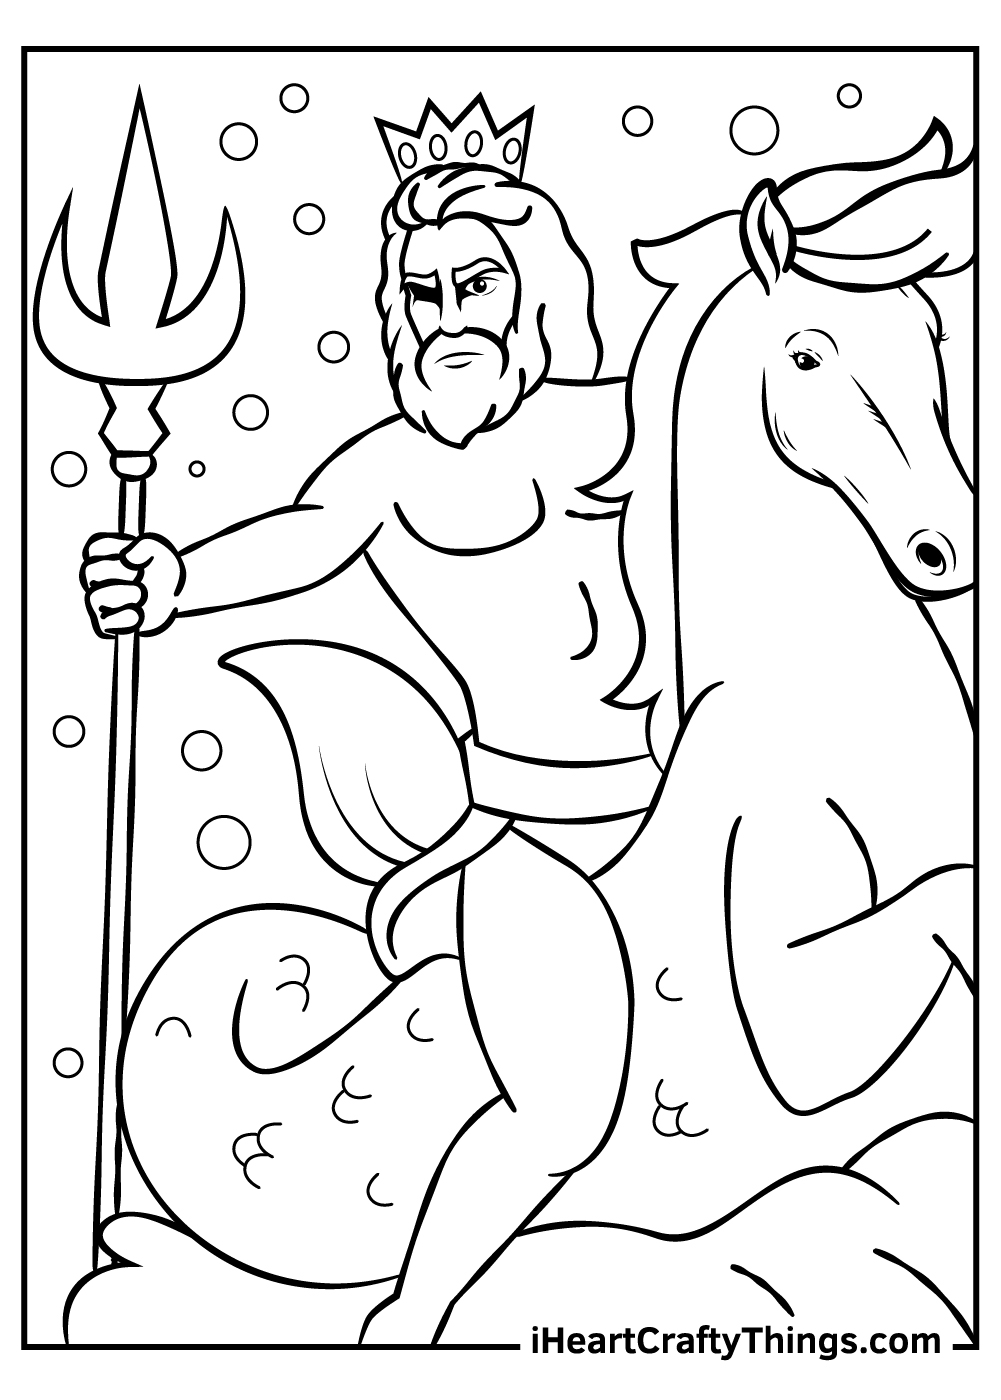 Coloring pages of greek mythology